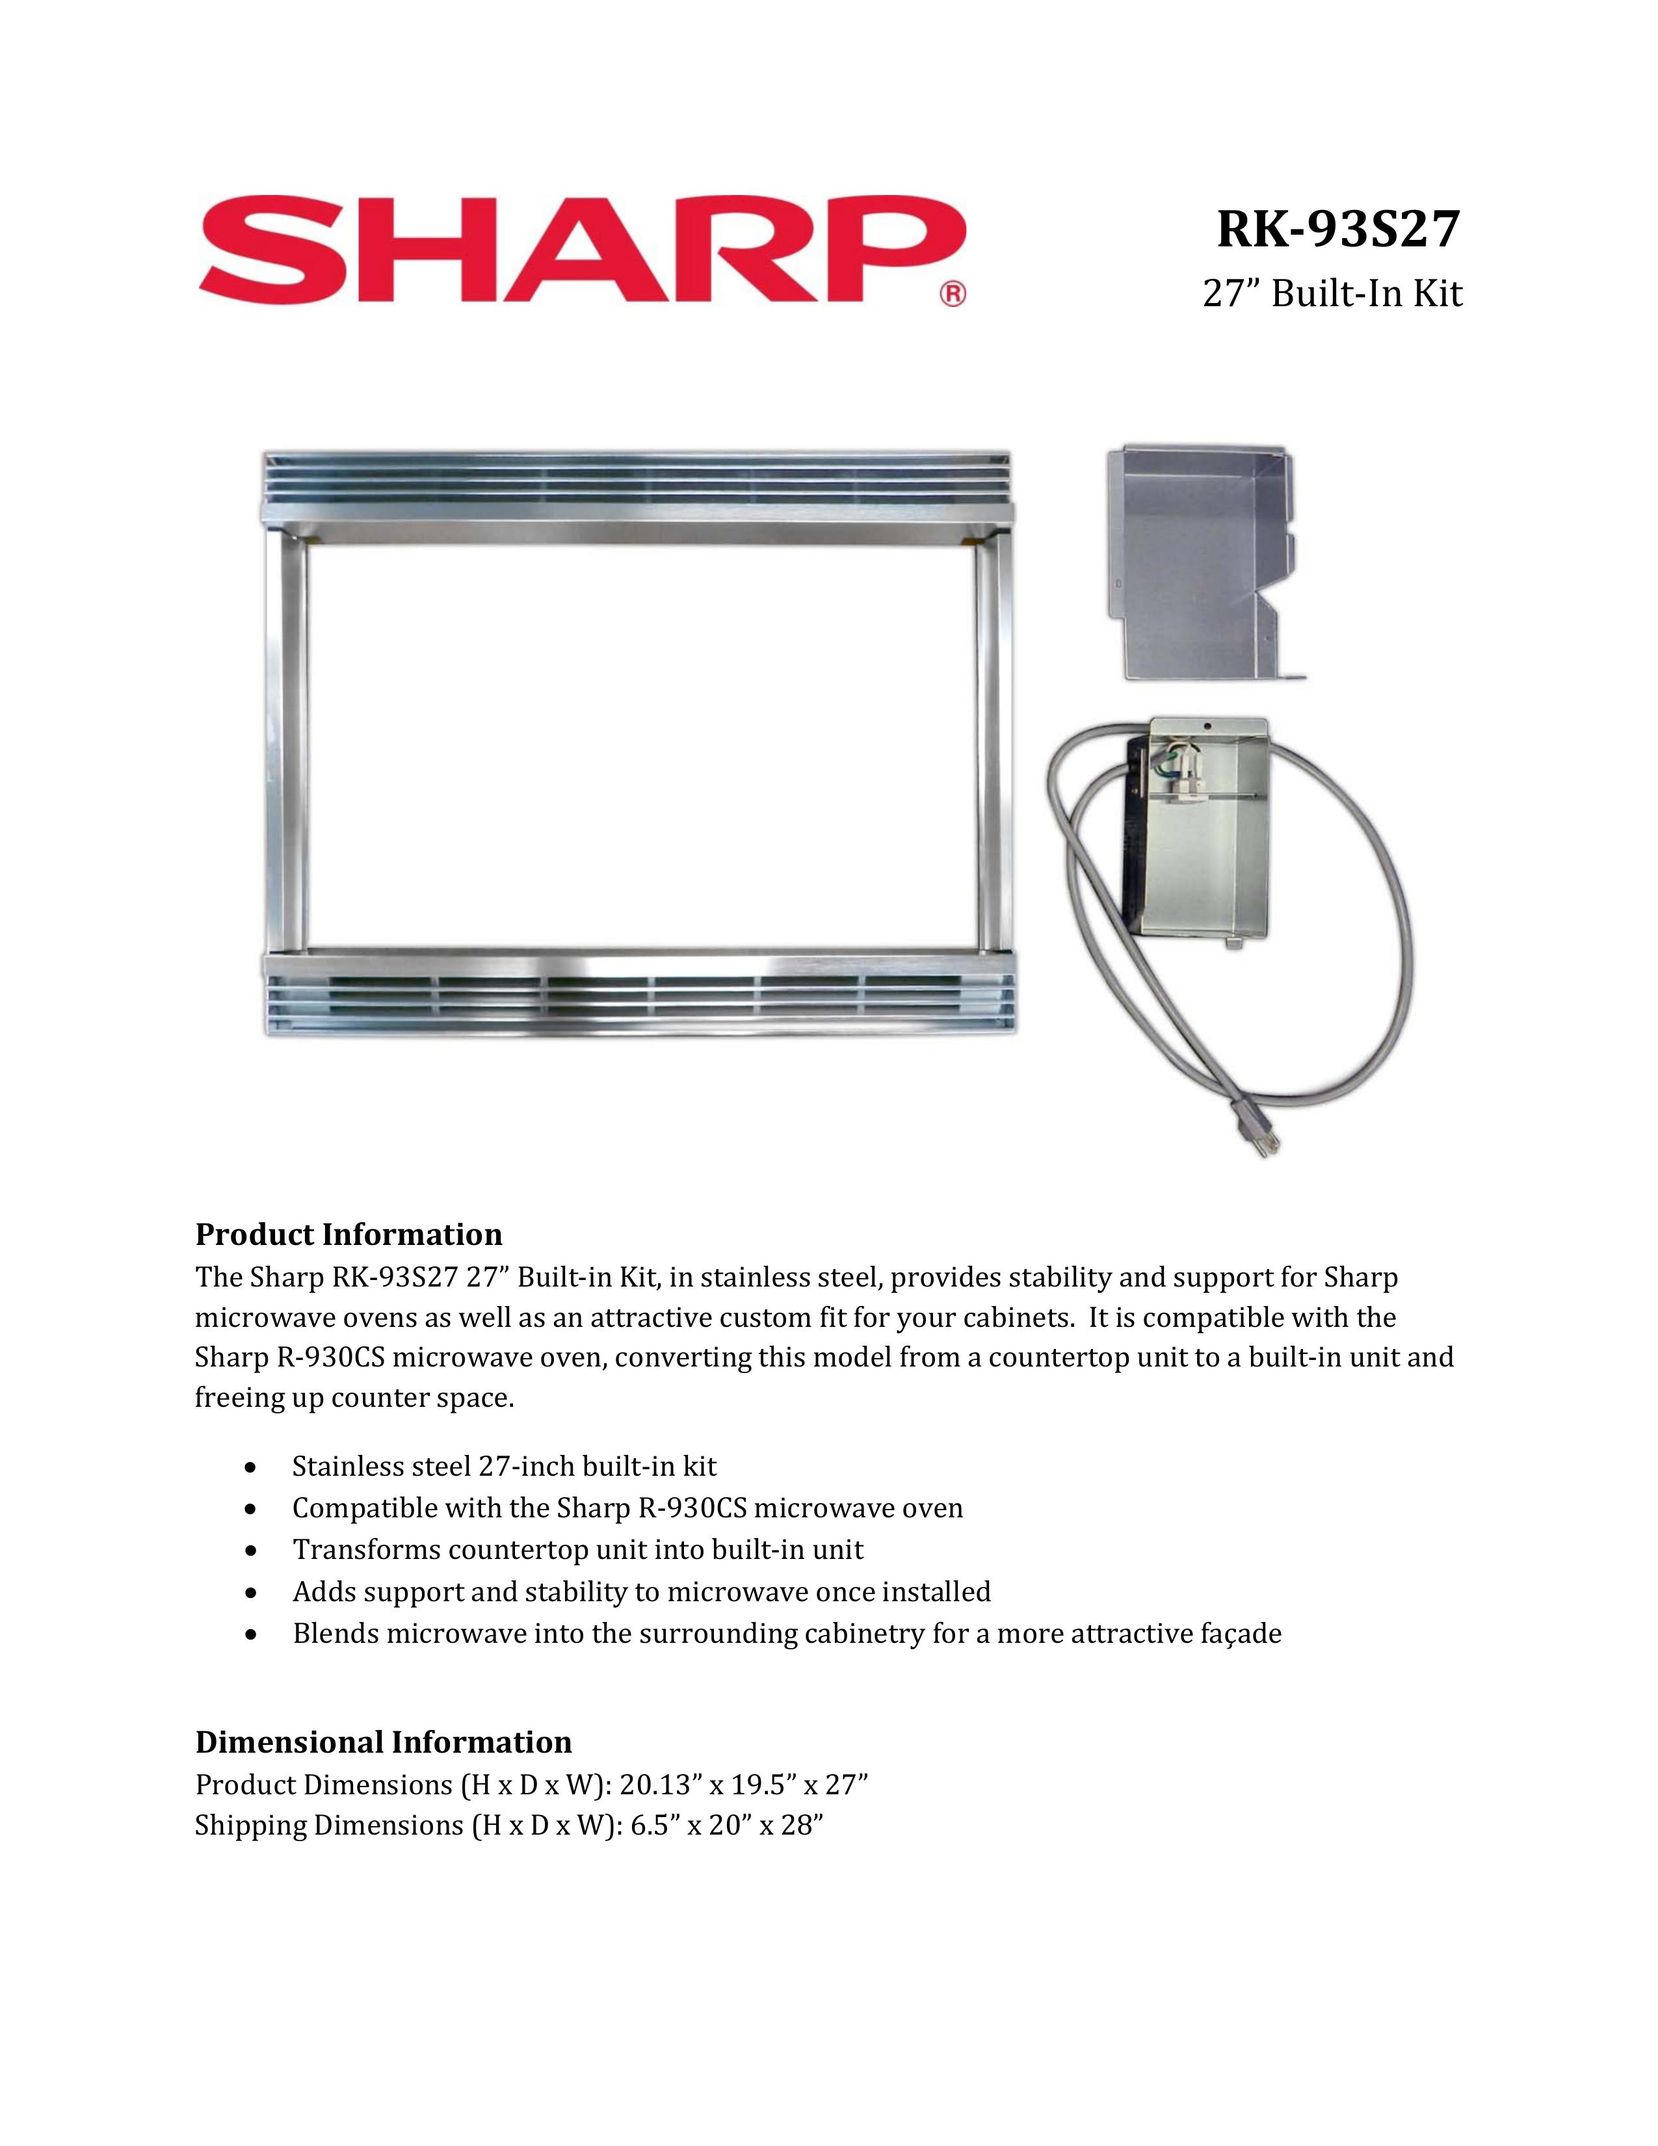 Sharp RK93S27 TV Mount User Manual